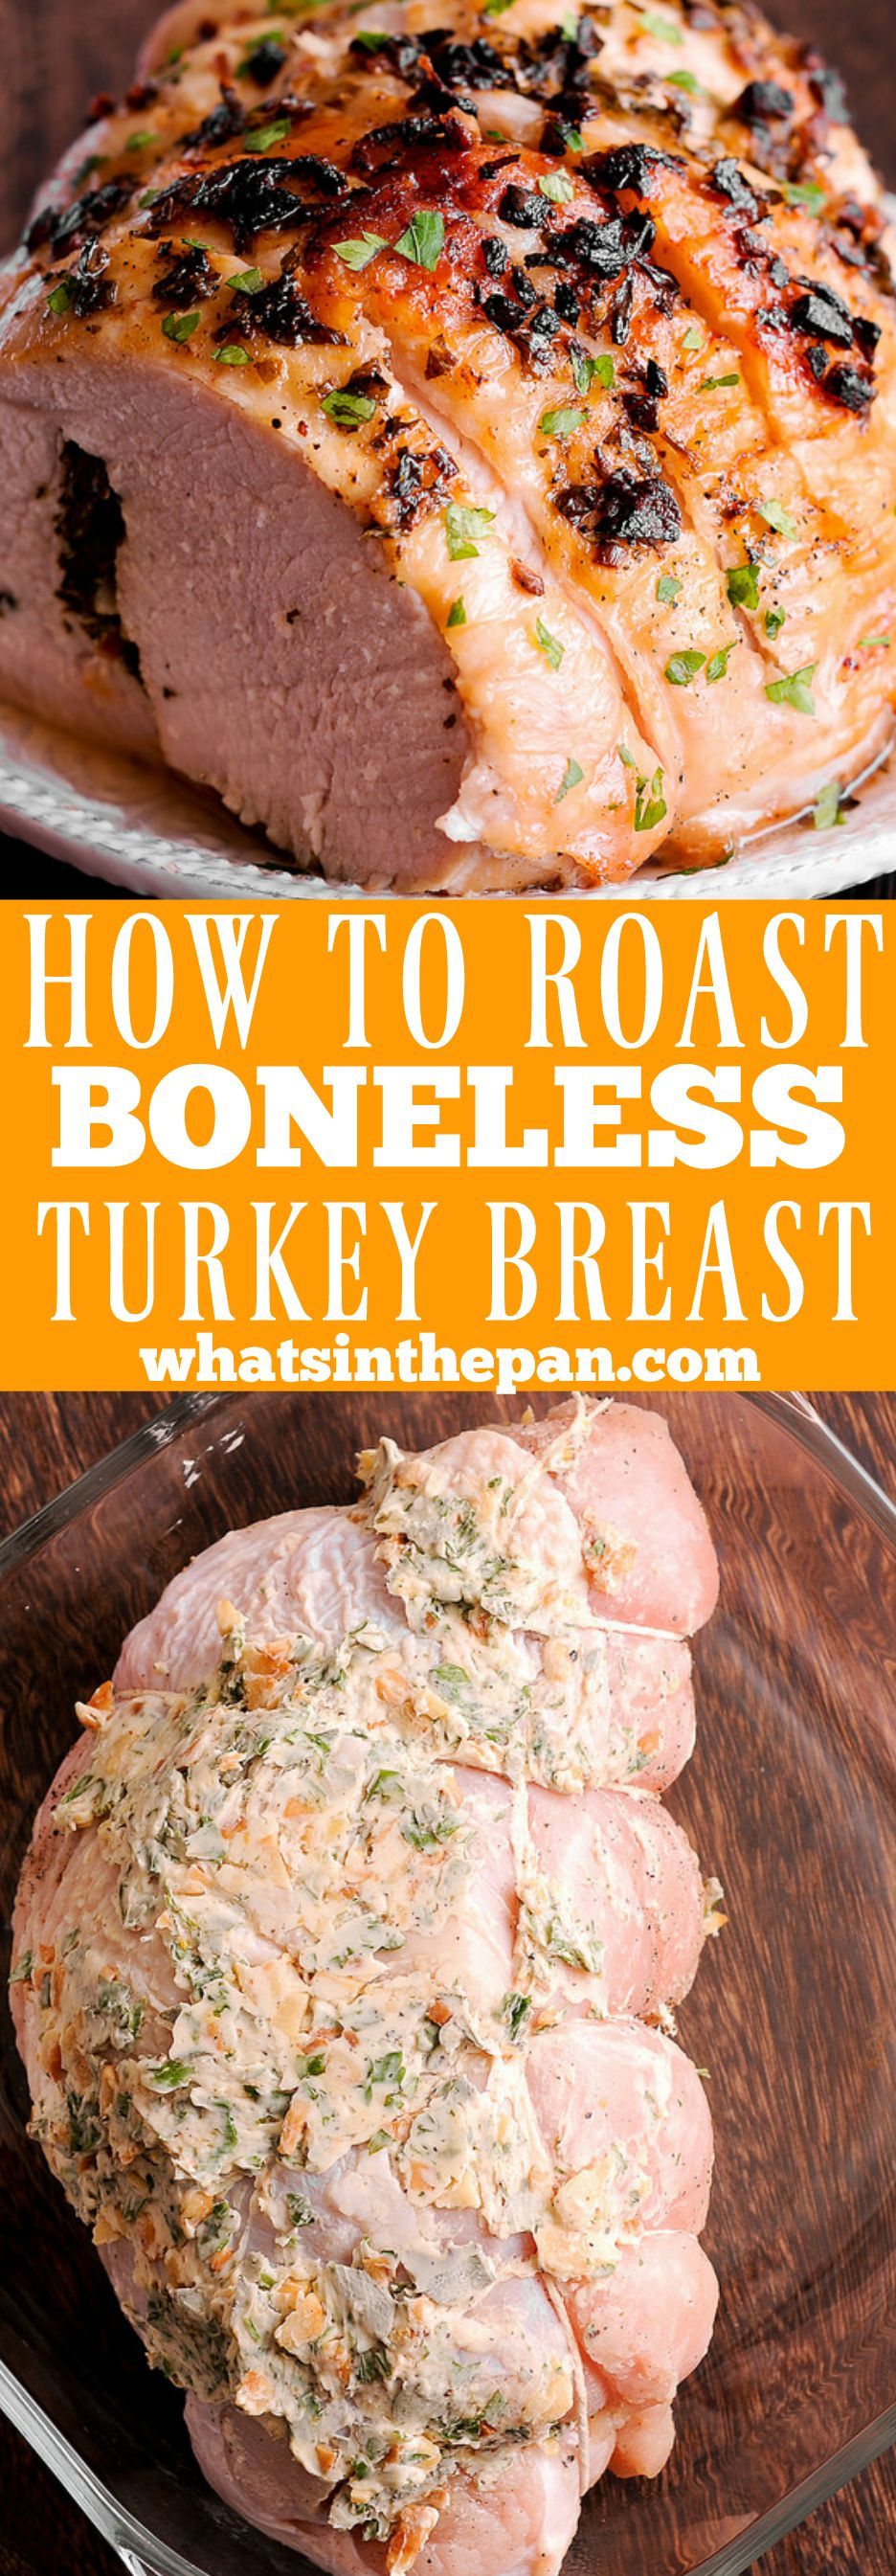 How to roast turkey breast - How to roast turkey breast -   19 turkey breast recipes boneless ideas